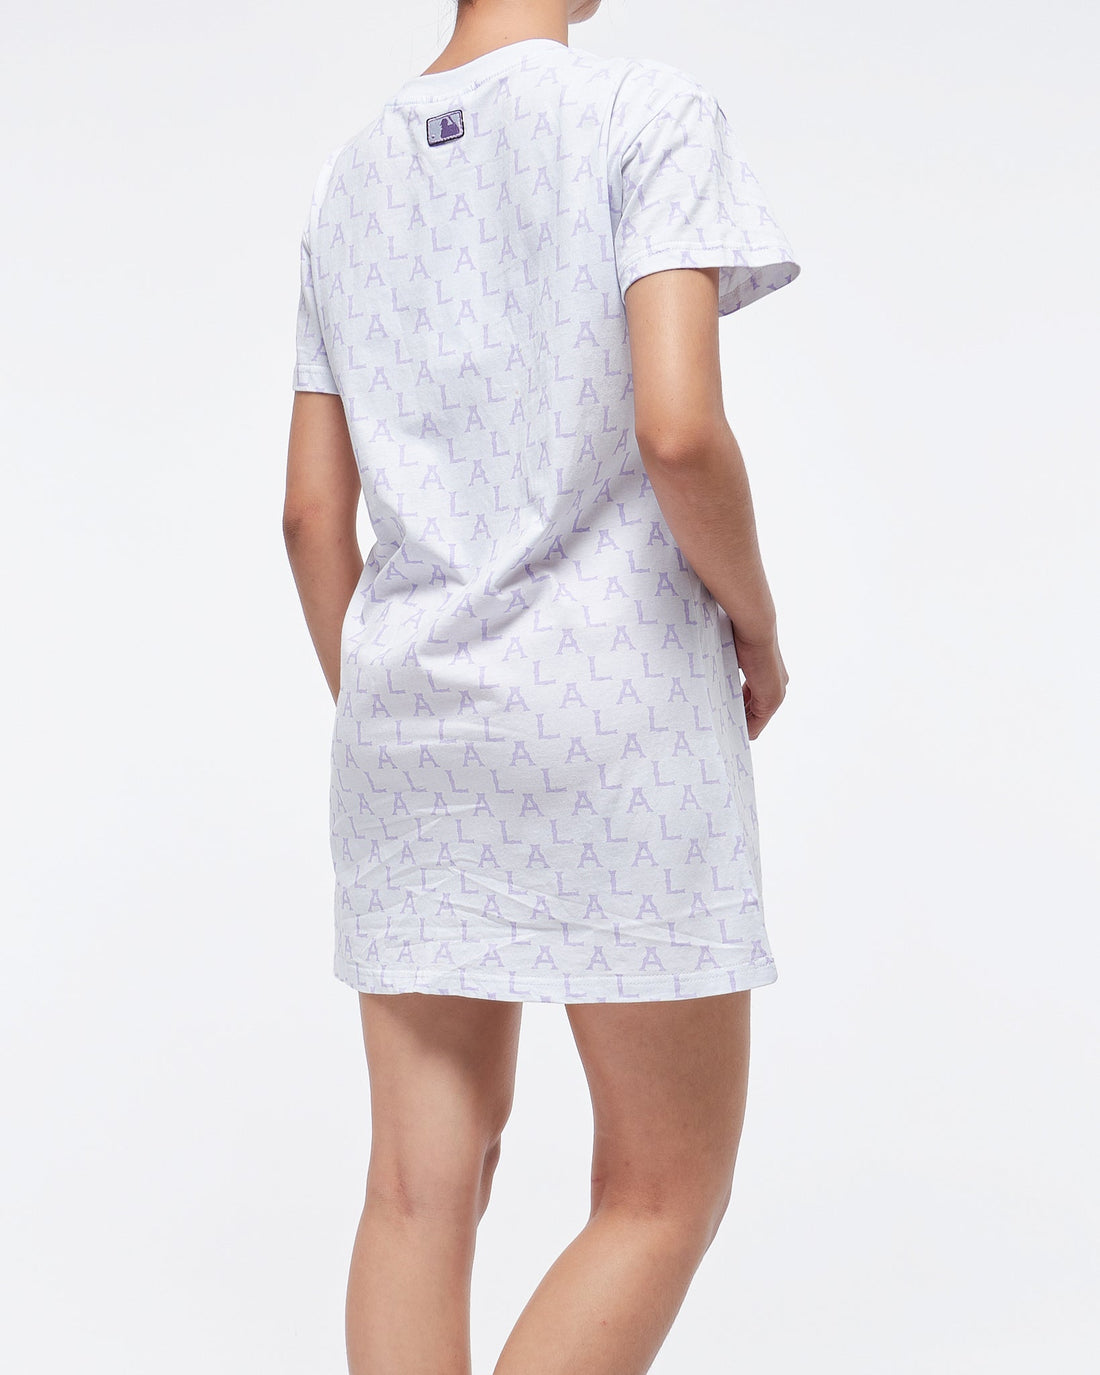 MOI OUTFIT-LA Monogranm Over Printed Lady T-Shirt Dress 22.90